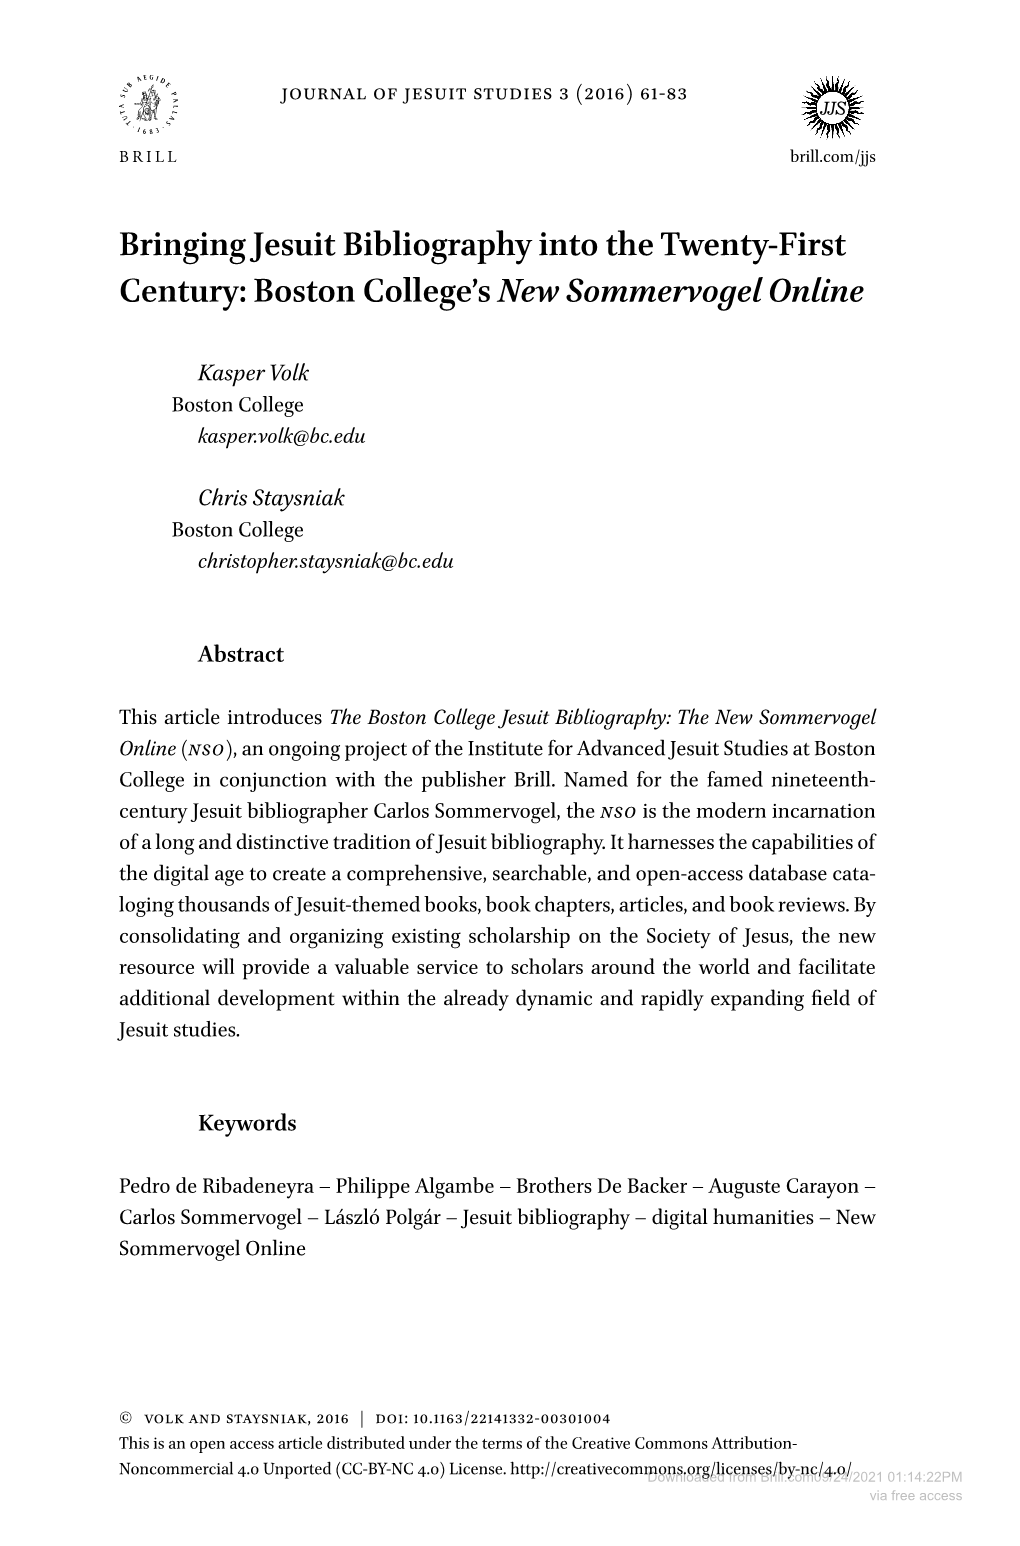 Bringing Jesuit Bibliography Into the Twenty-First Century: Boston College’S New Sommervogel Online